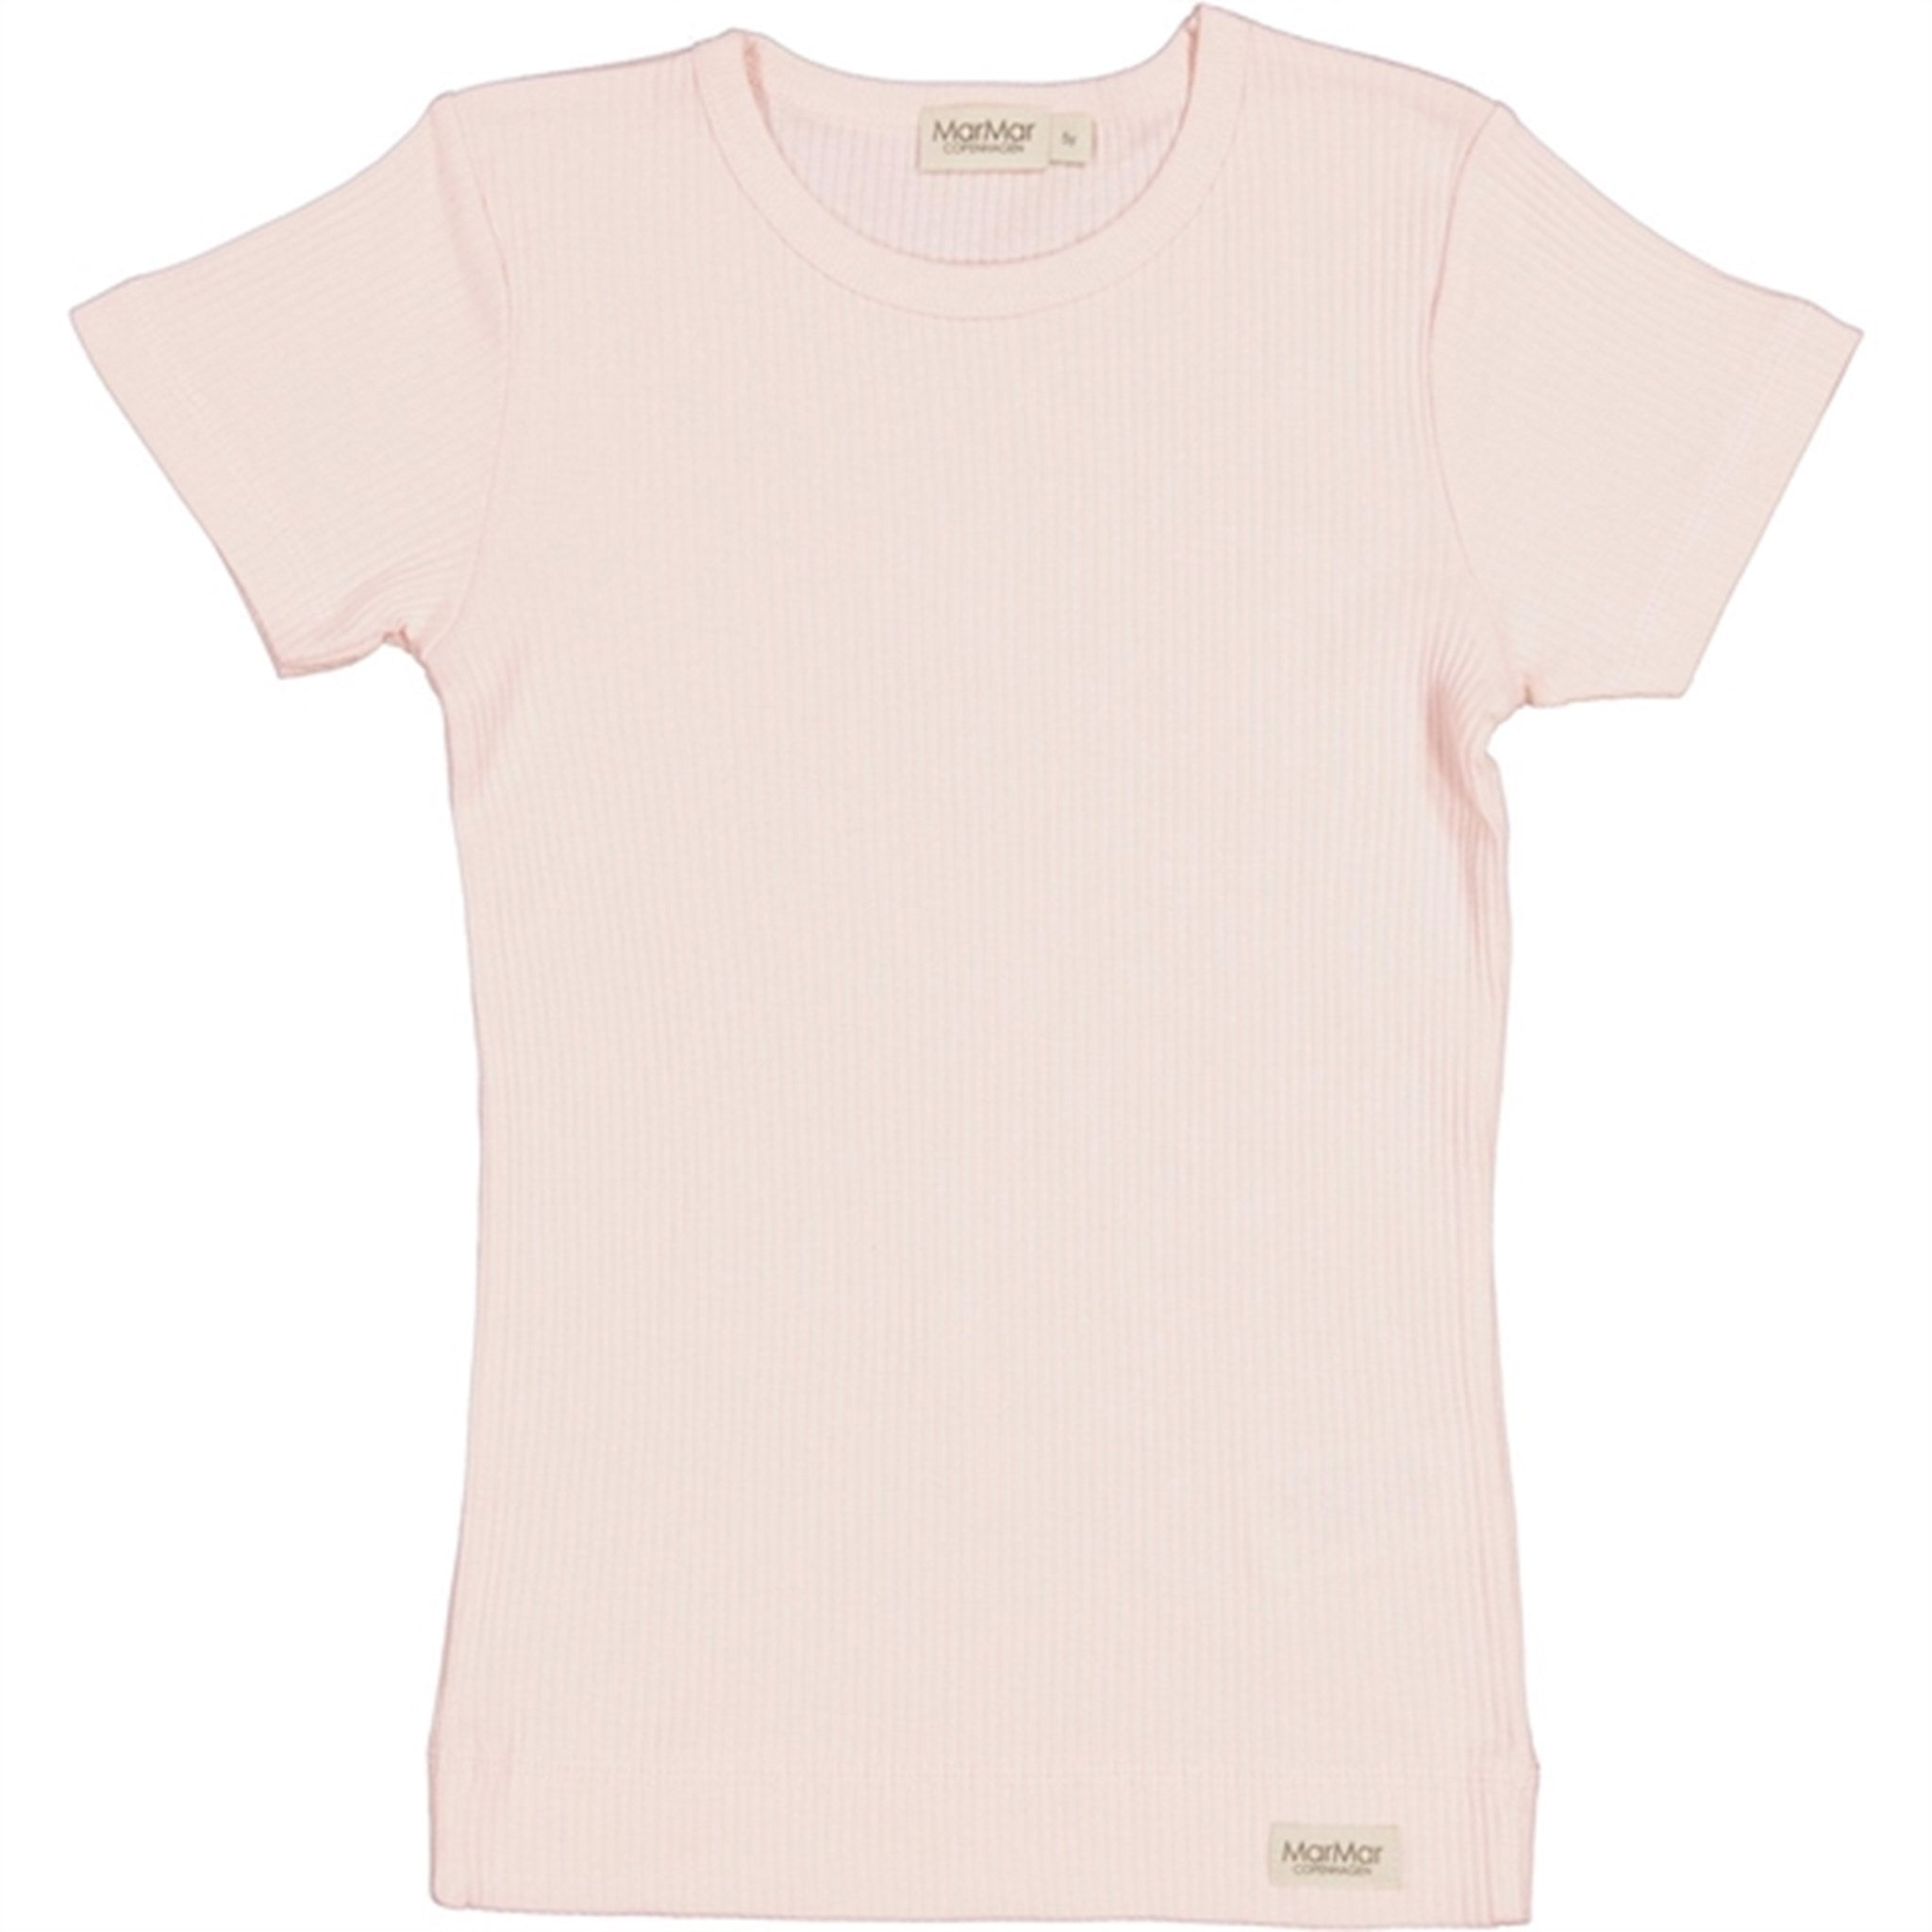 MarMar Modal Barely Rose Plain T-shirt